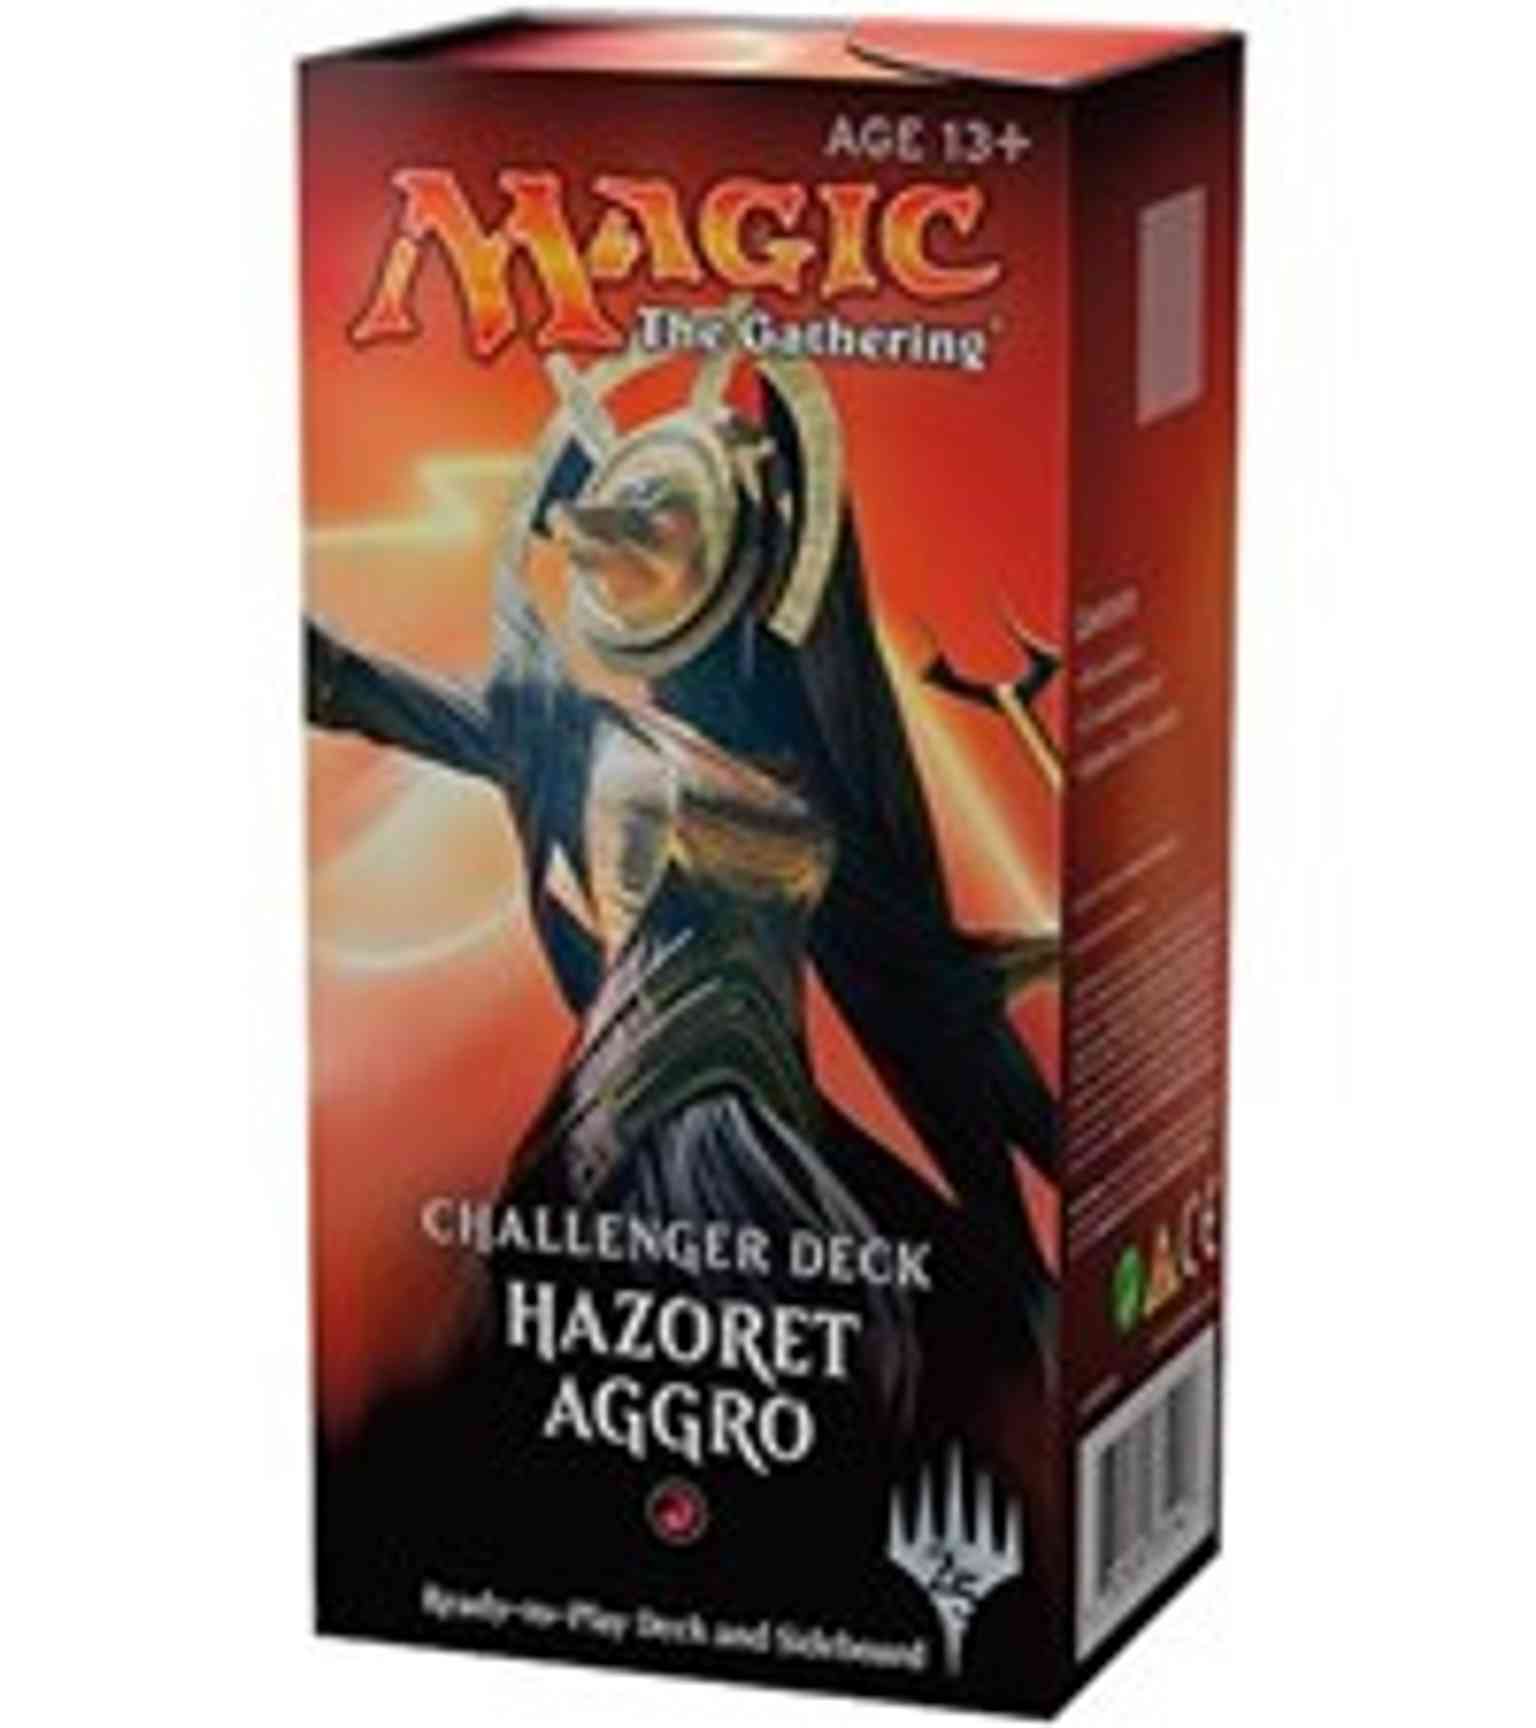 Challenger Deck 2018: Hazoret Aggro magic card front